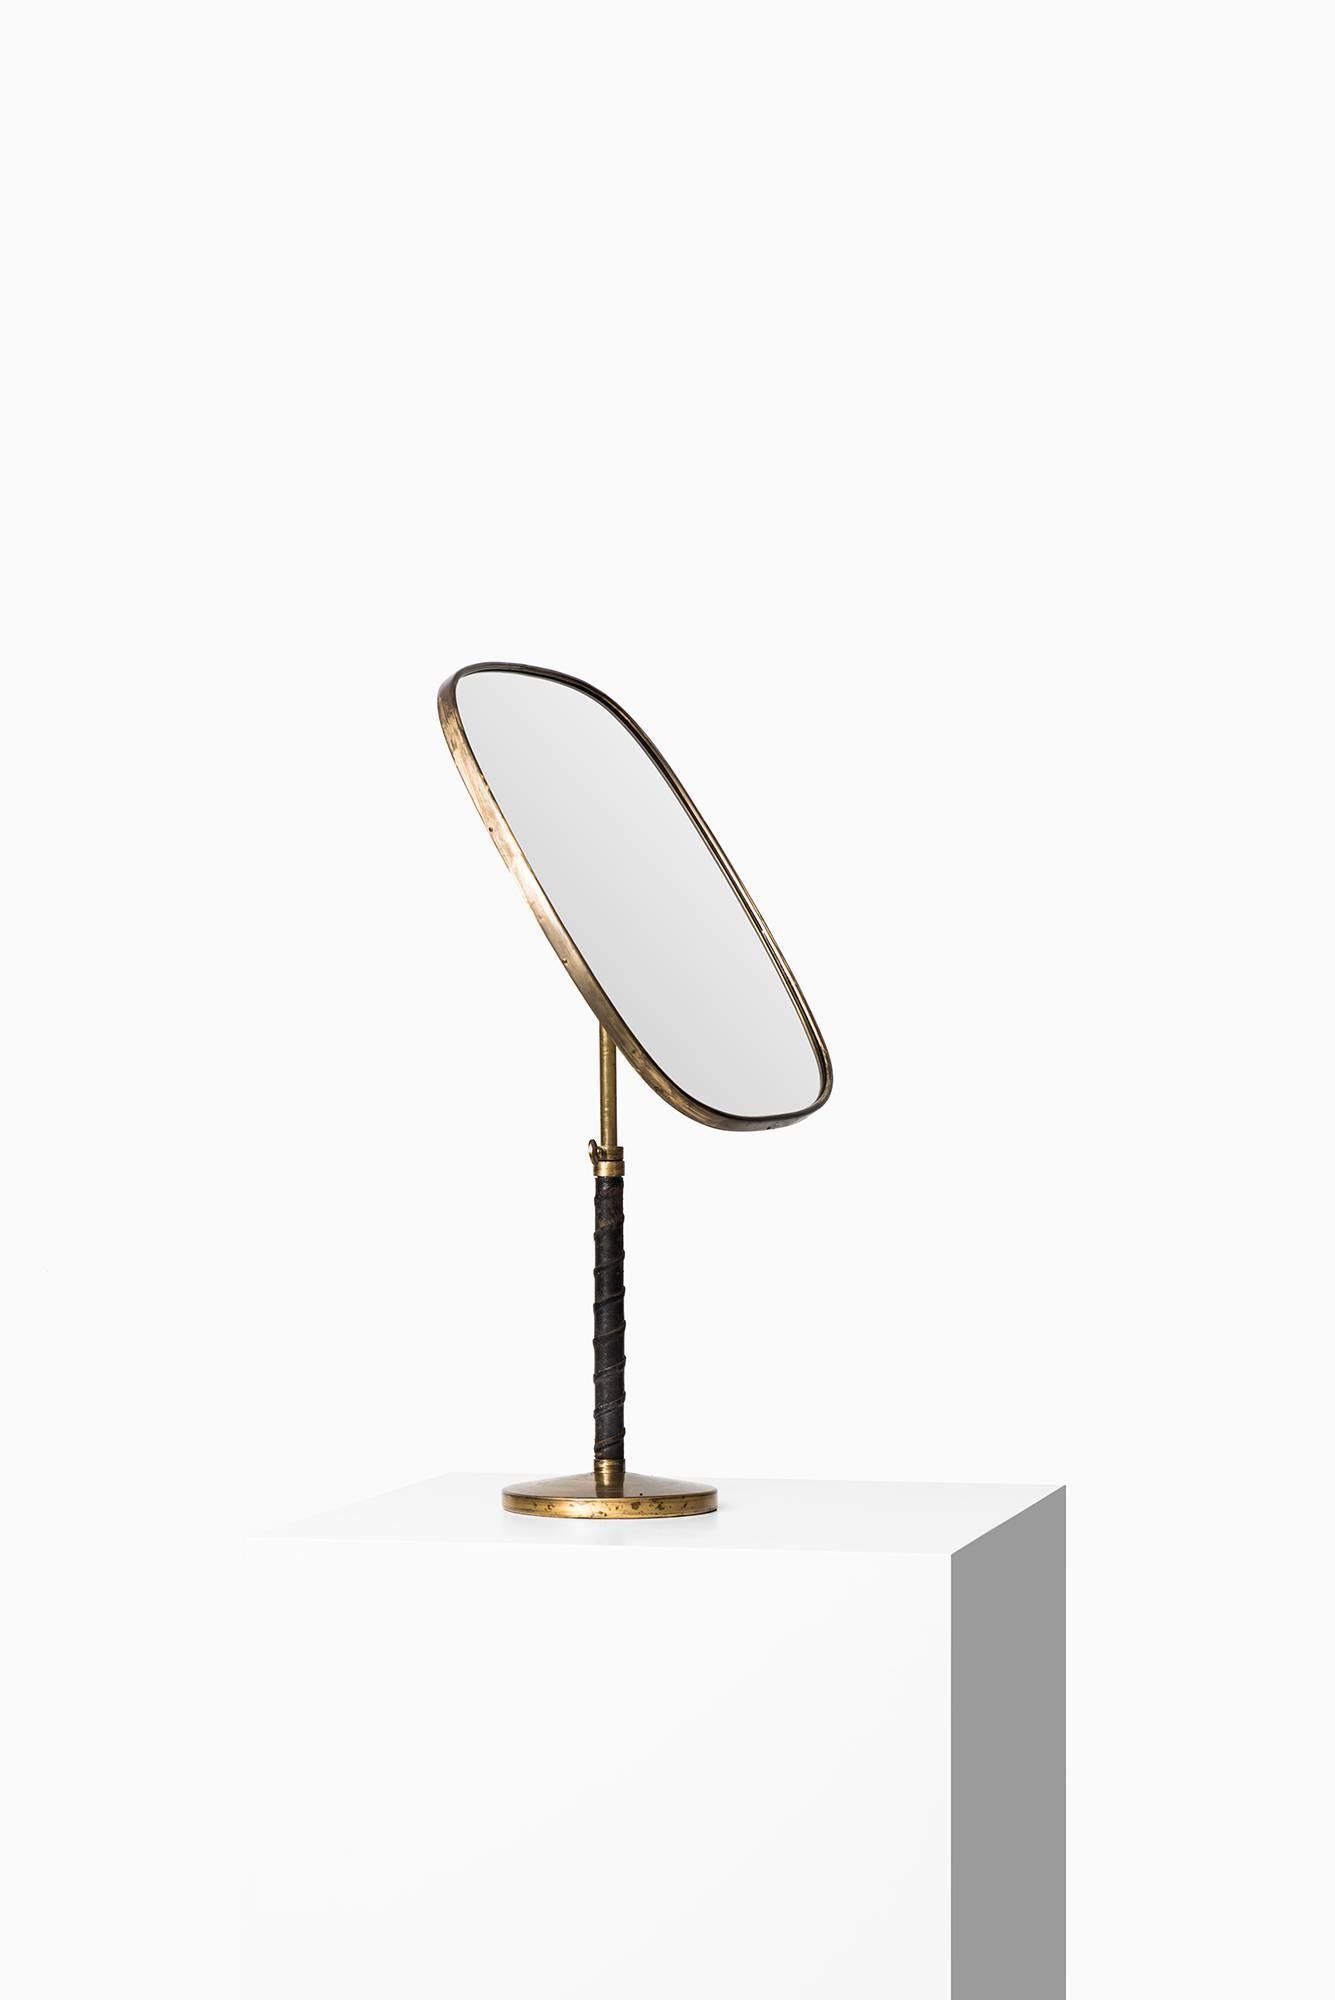 Swedish Height Adjustable Mirror Attributed to Josef Frank